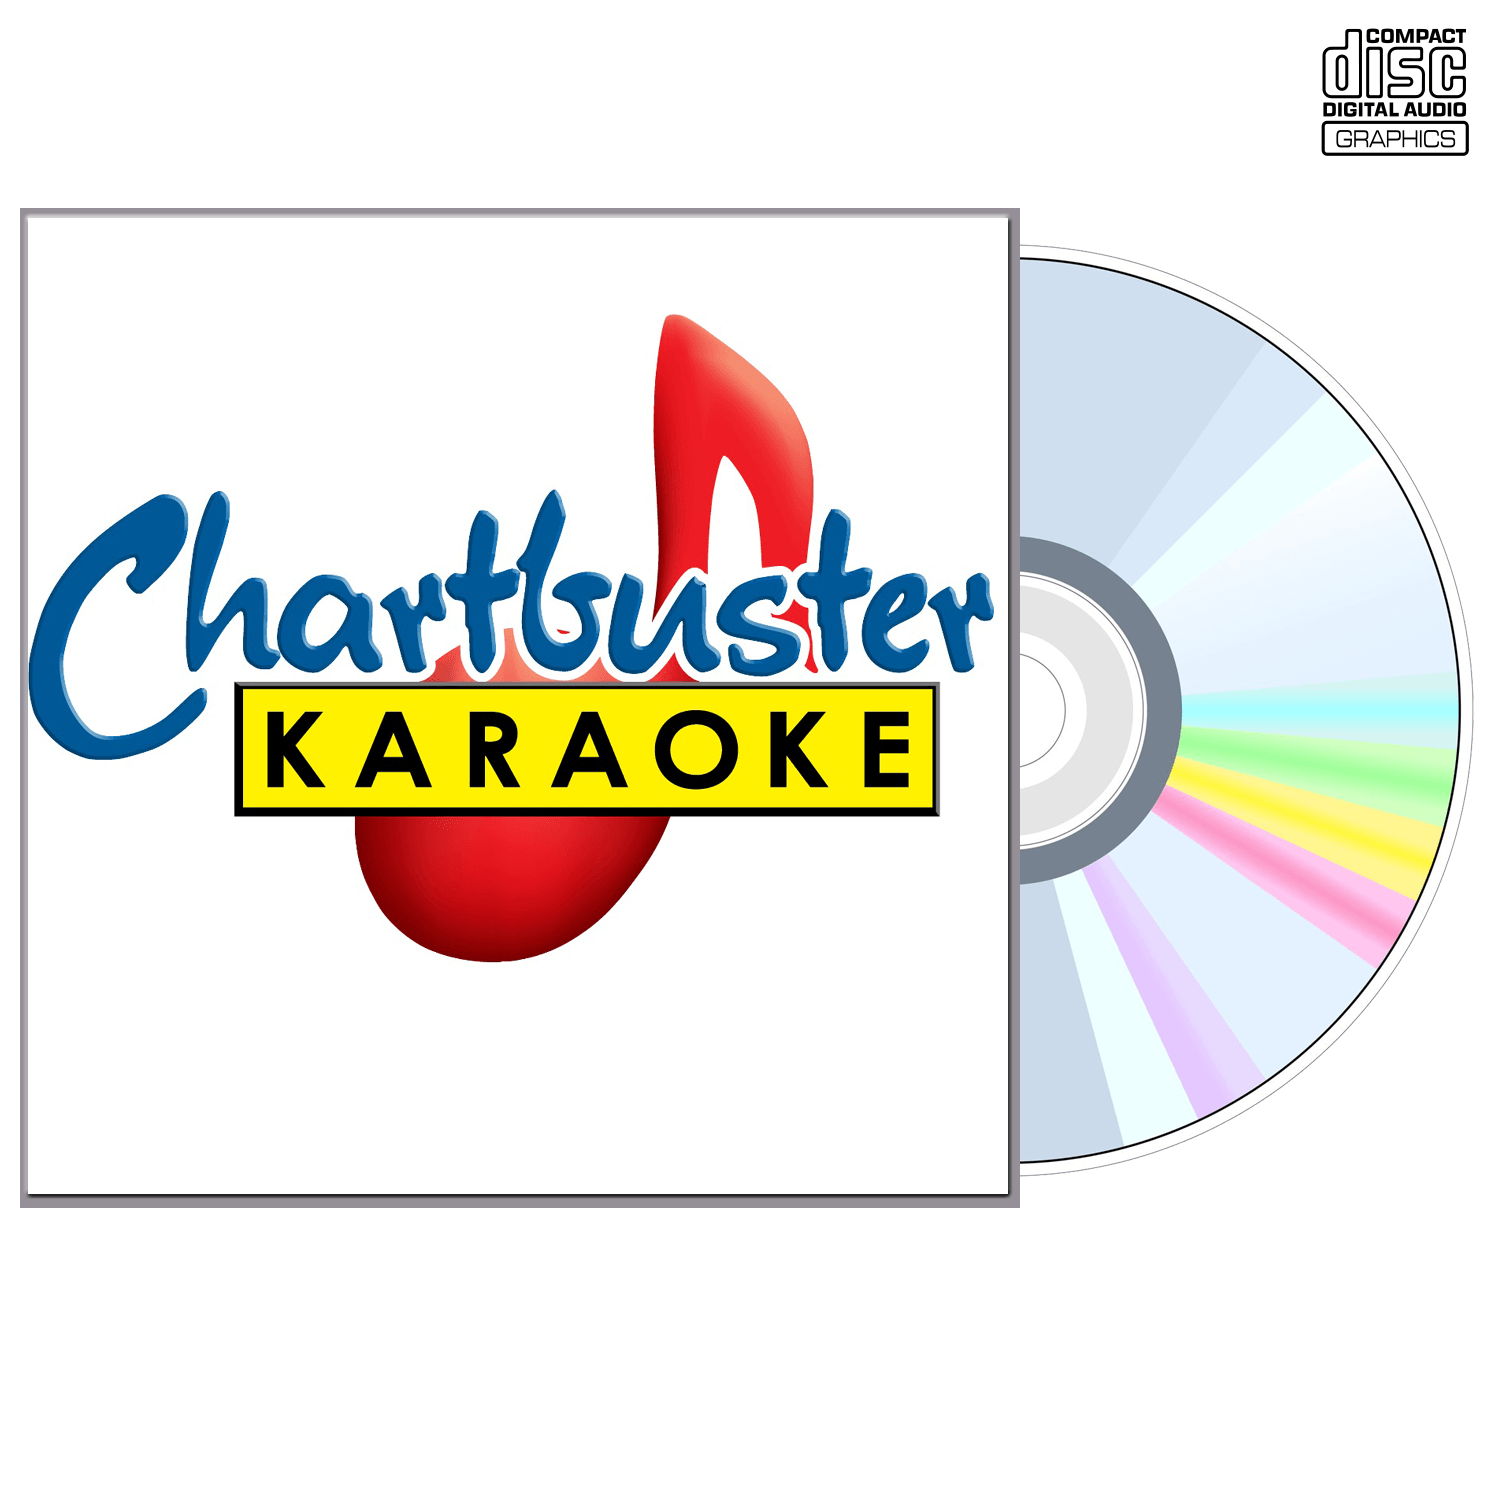 Stacie Orrico - CD+G - Chartbuster Karaoke - Karaoke Home Entertainment